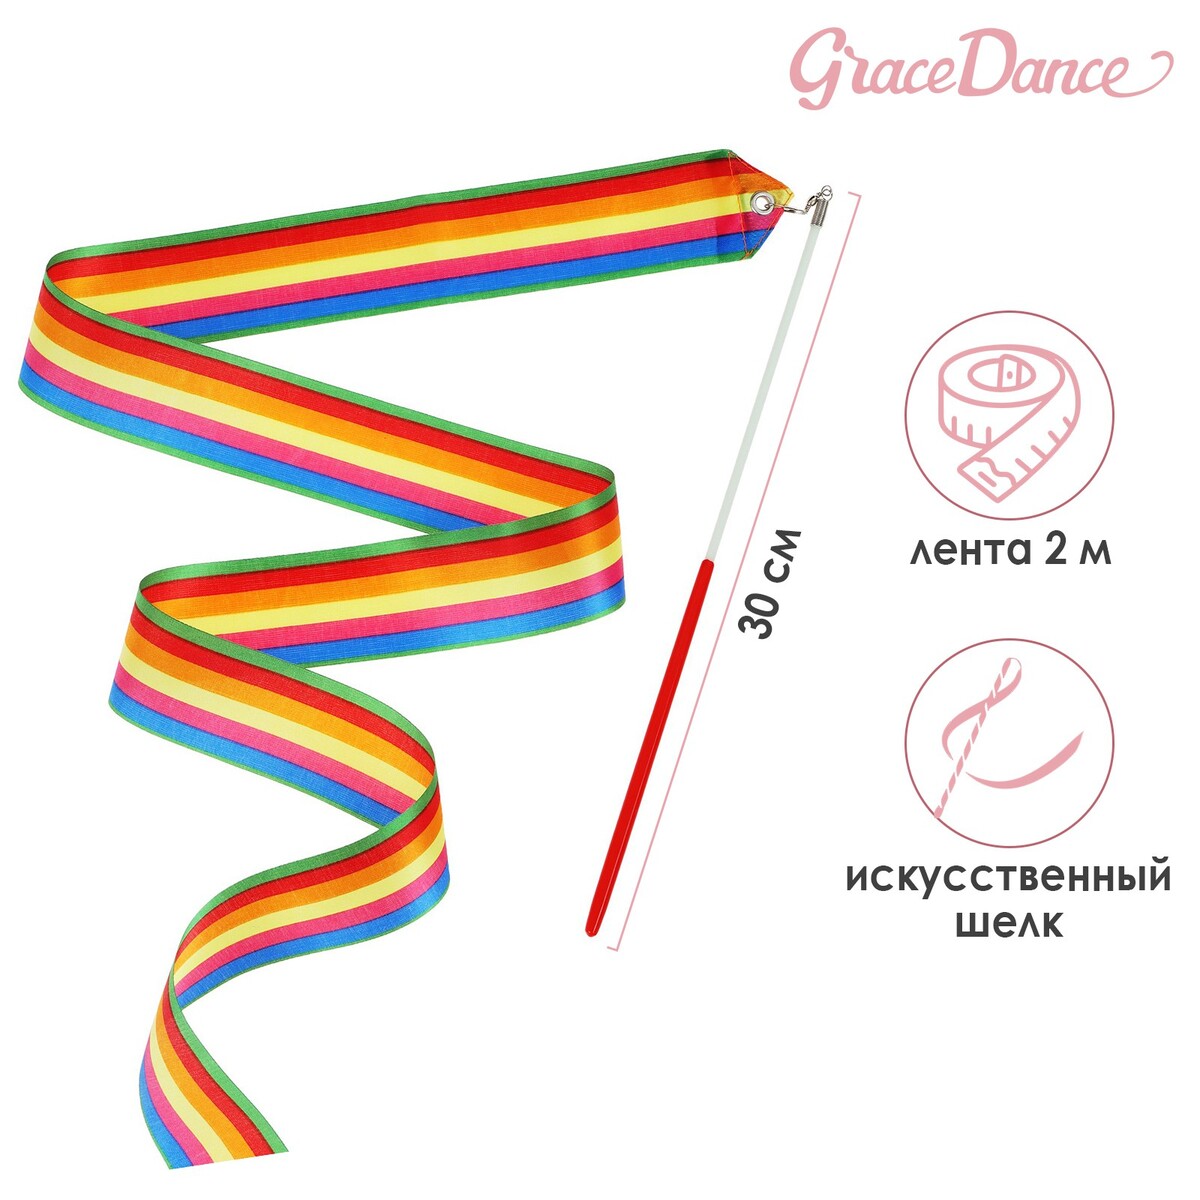 Лента для художественной гимнастики с палочкой grace dance, 2 м, цвет радуга лента гимнастическая с палочкой grace dance 4 м фуксия